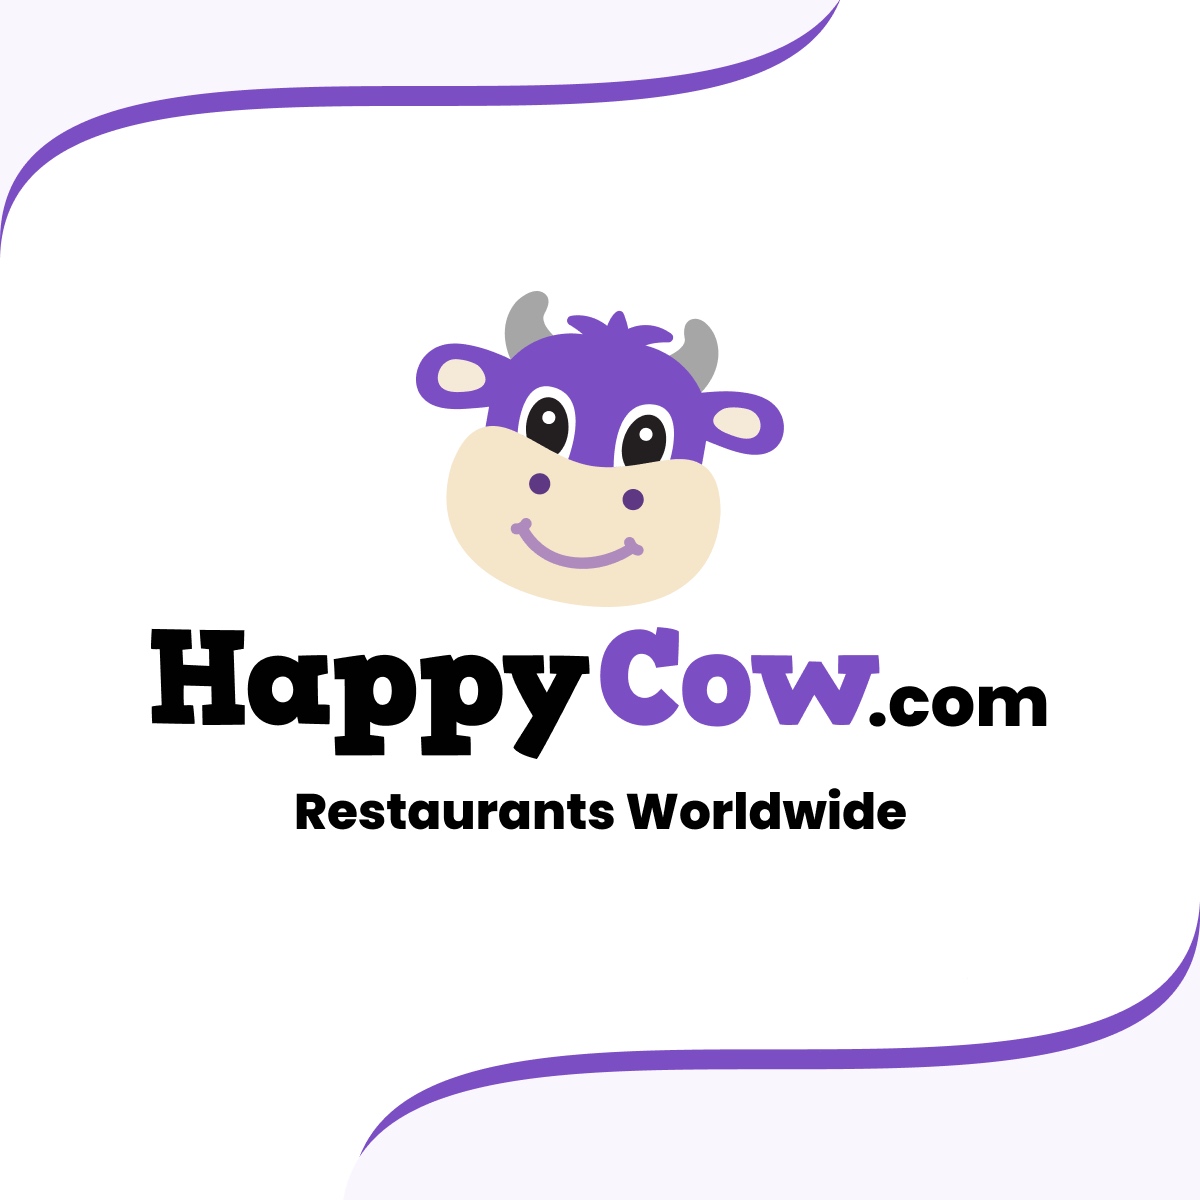 Find Vegan & Vegetarian Restaurants Near Me - HappyCow